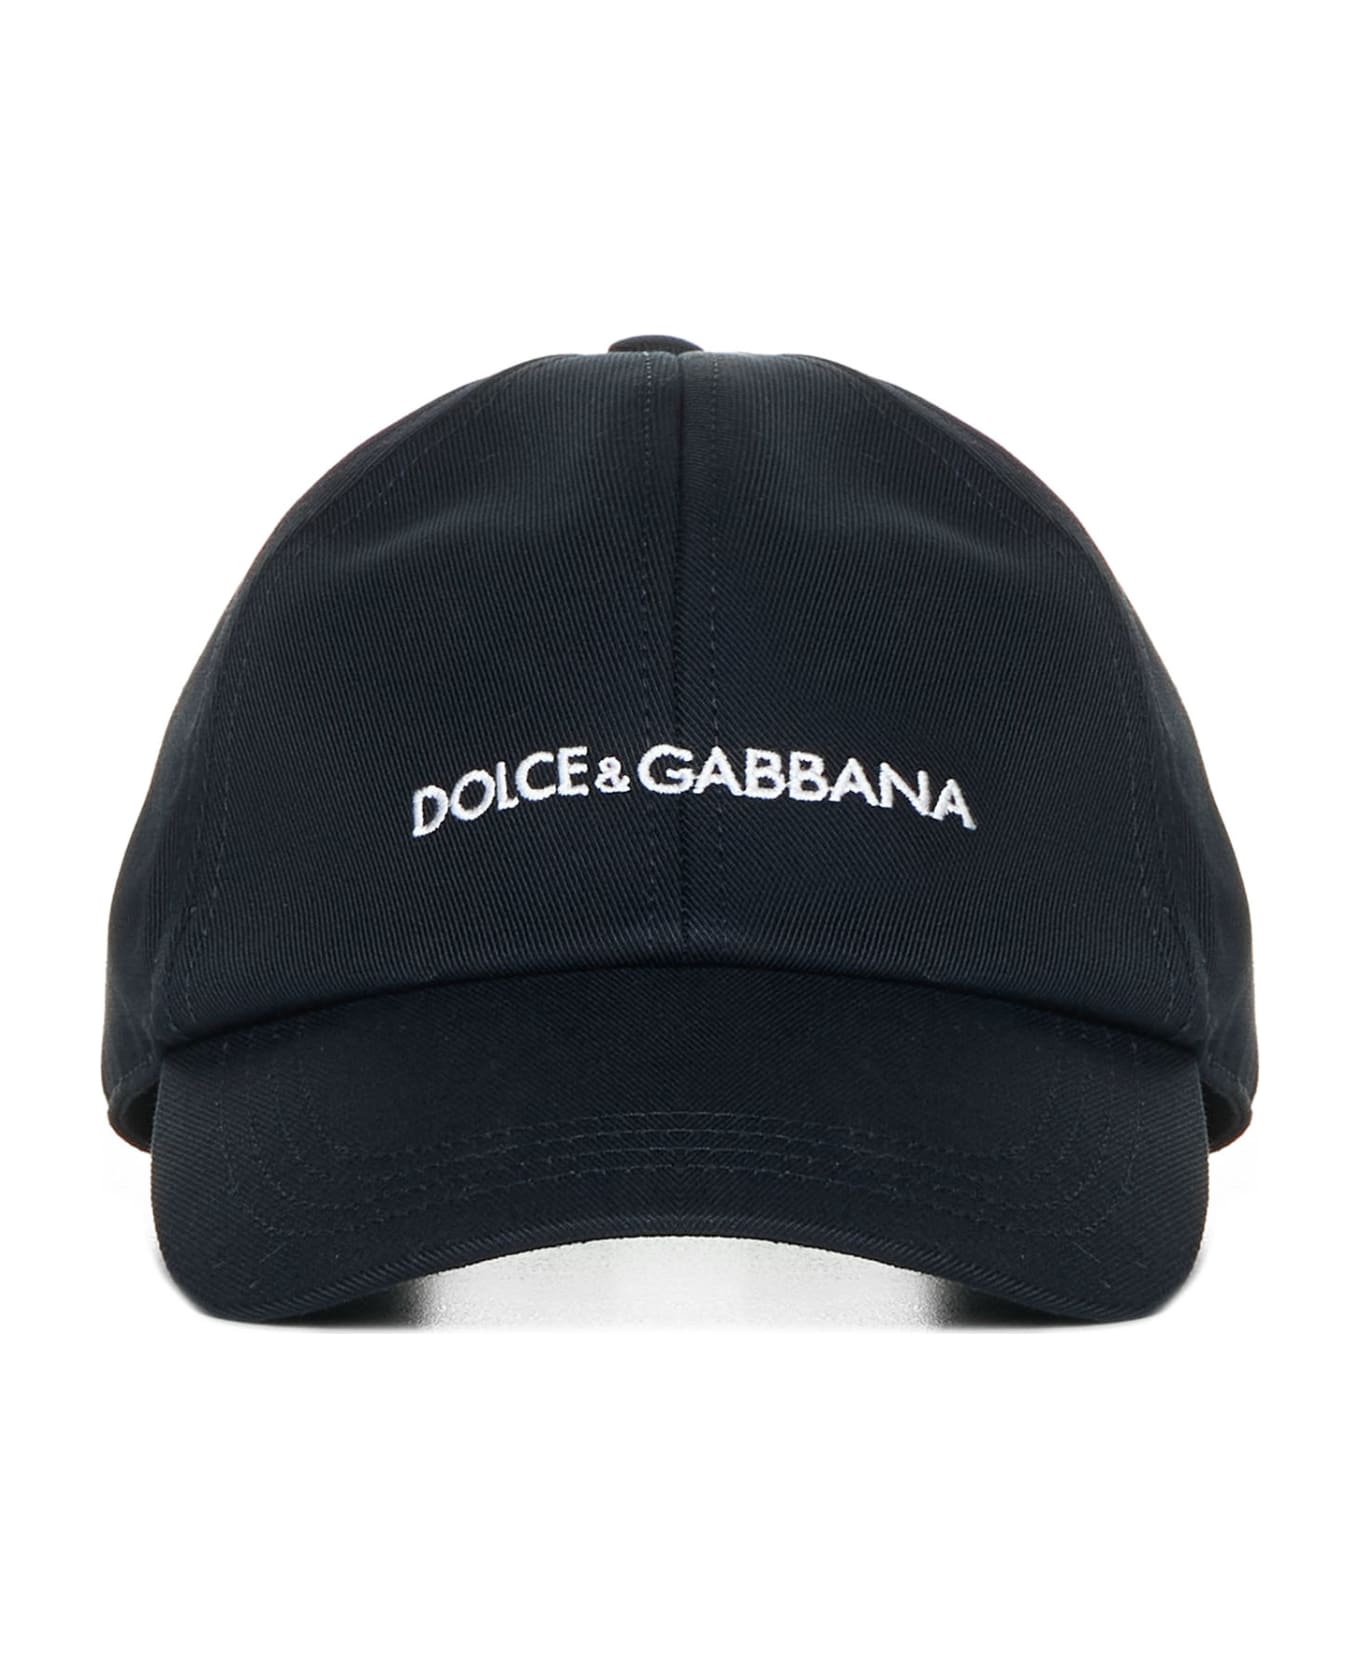 Dolce & Gabbana Cotton Hat - Black